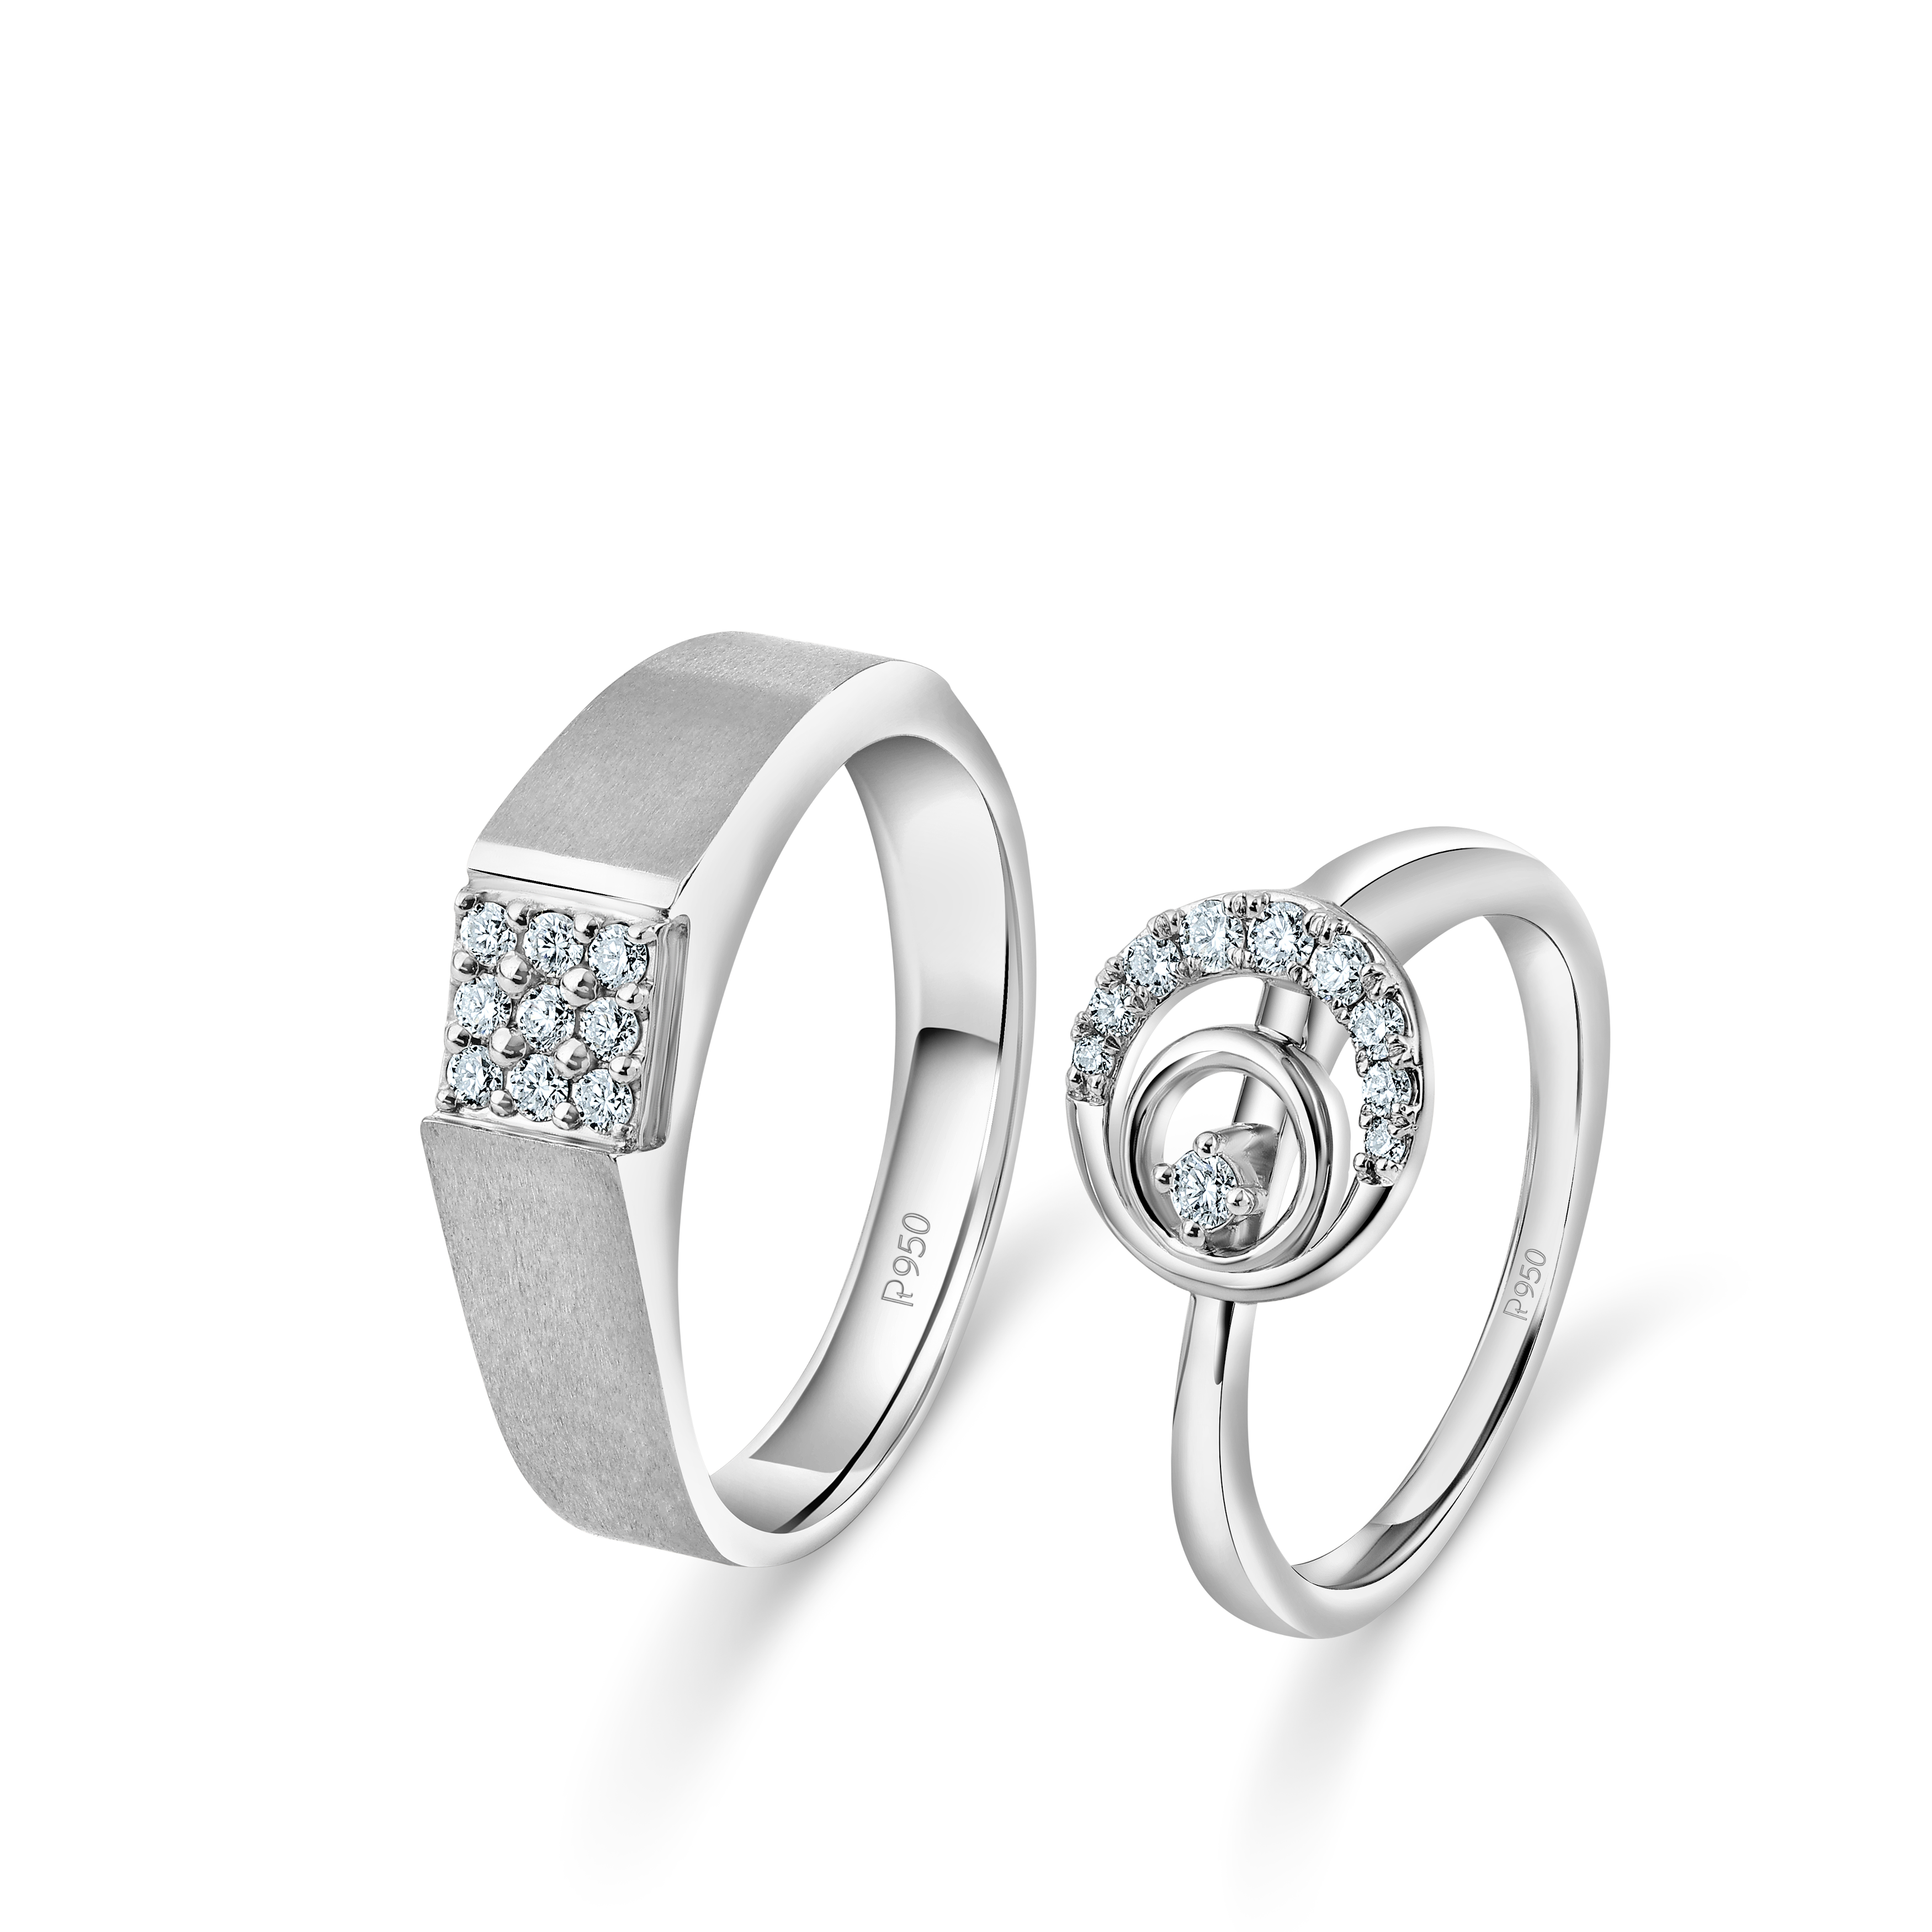 Simplicity Charisma Couple Ring - Vinstella Jewellery